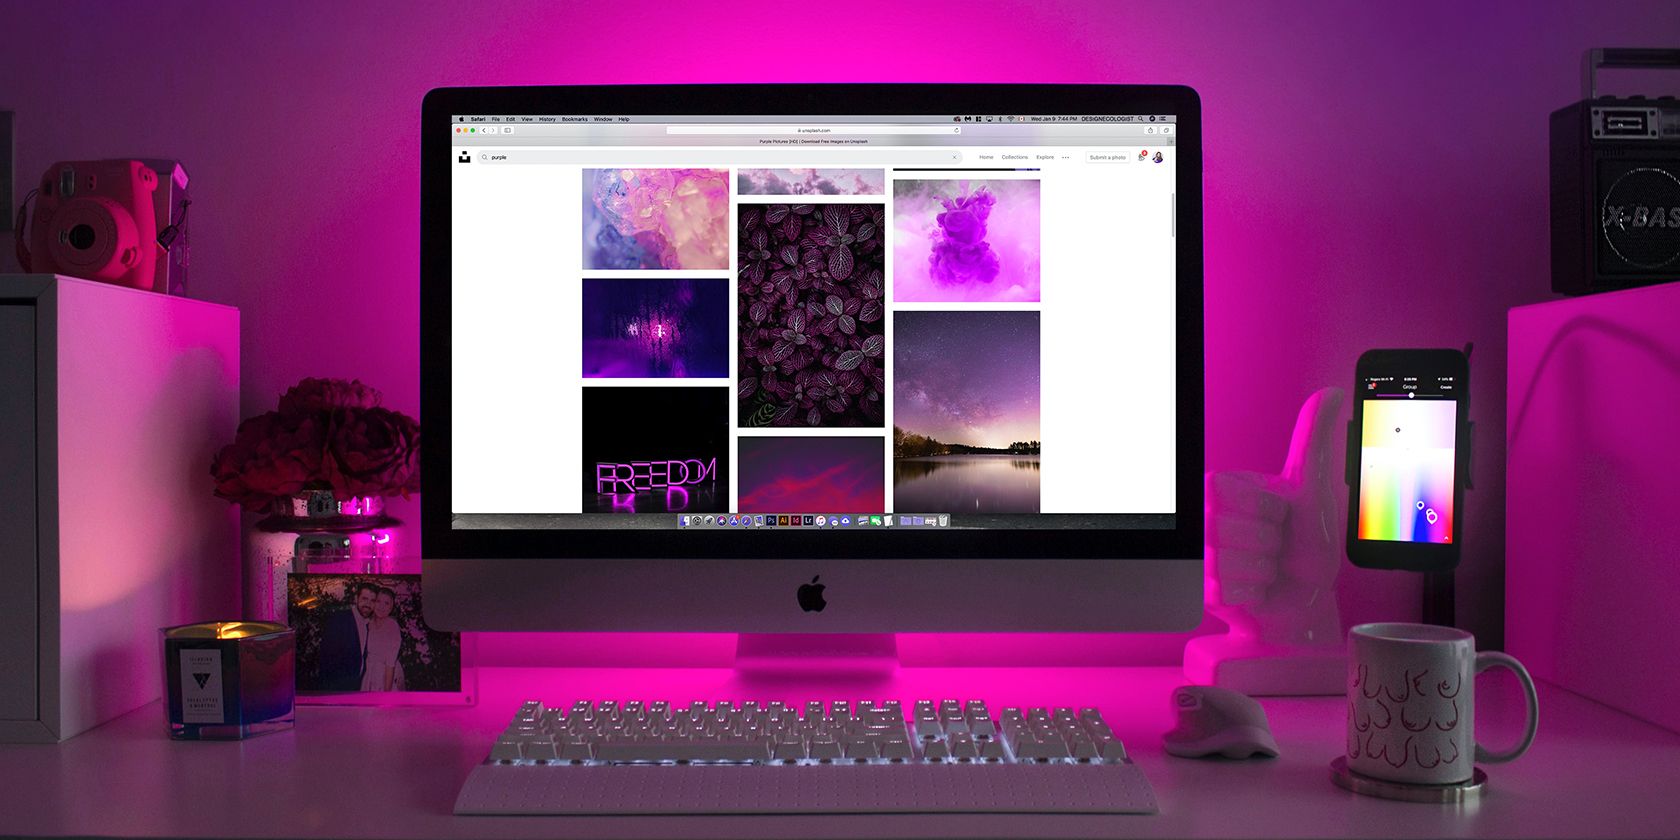 MacBook computer with Unsplash website on screen, lit in pink hue.